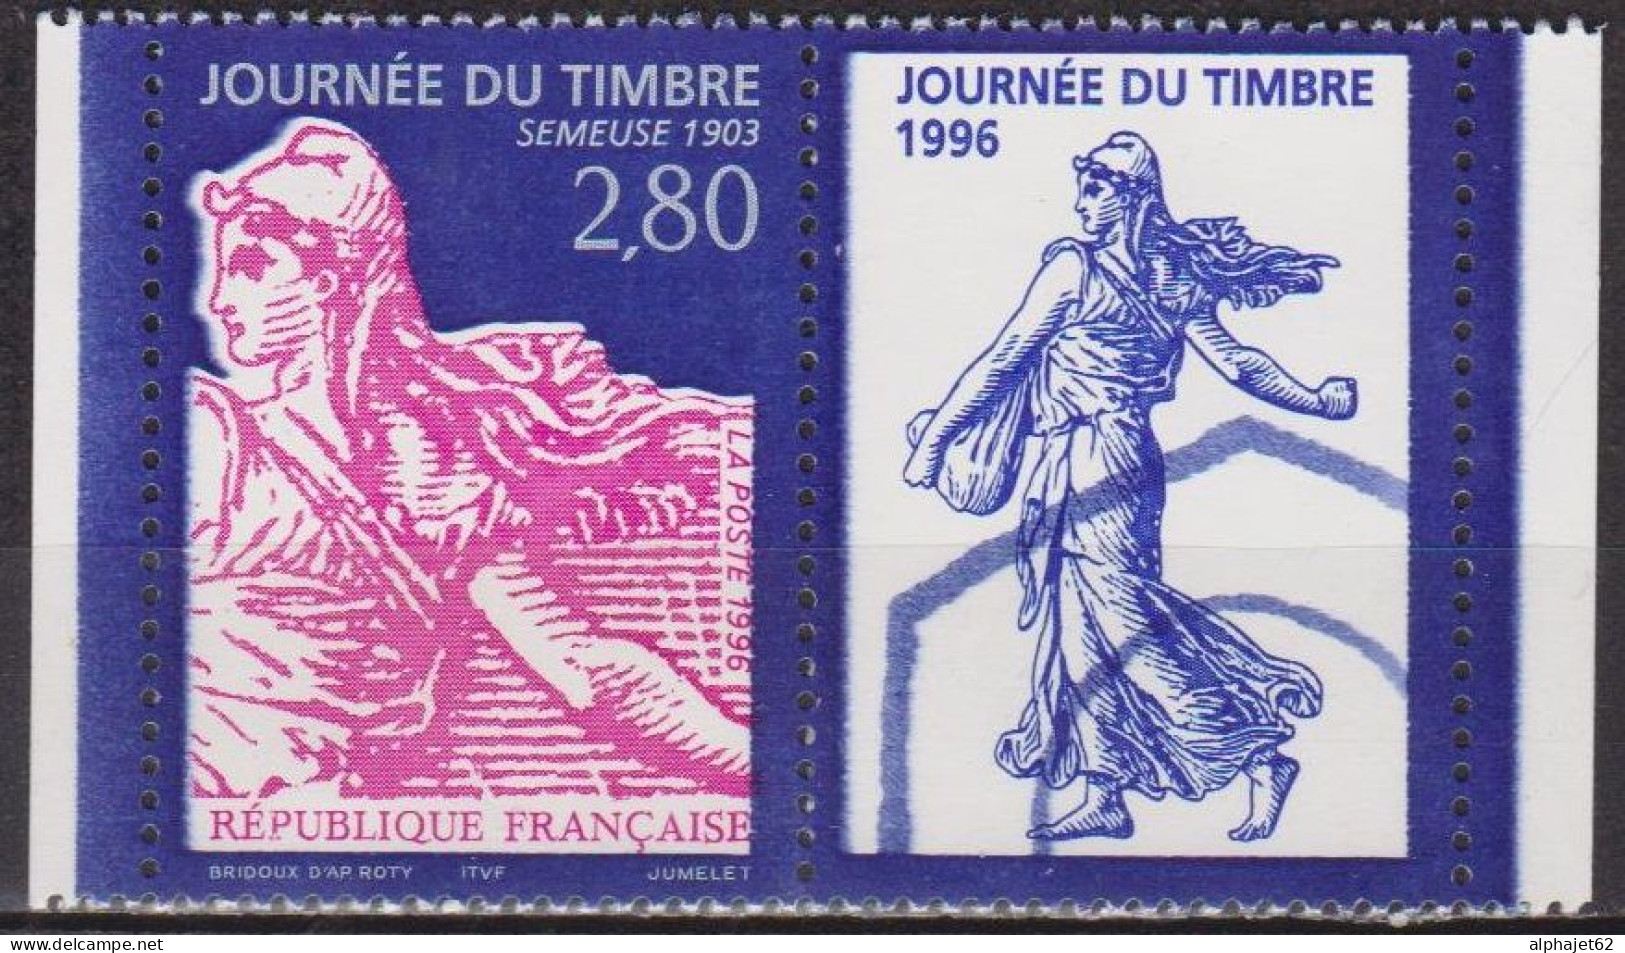 Journée Du Timbre, Type Semeuse 1903 - FRANCE - N° 2991 A ** - 1996 - Unused Stamps